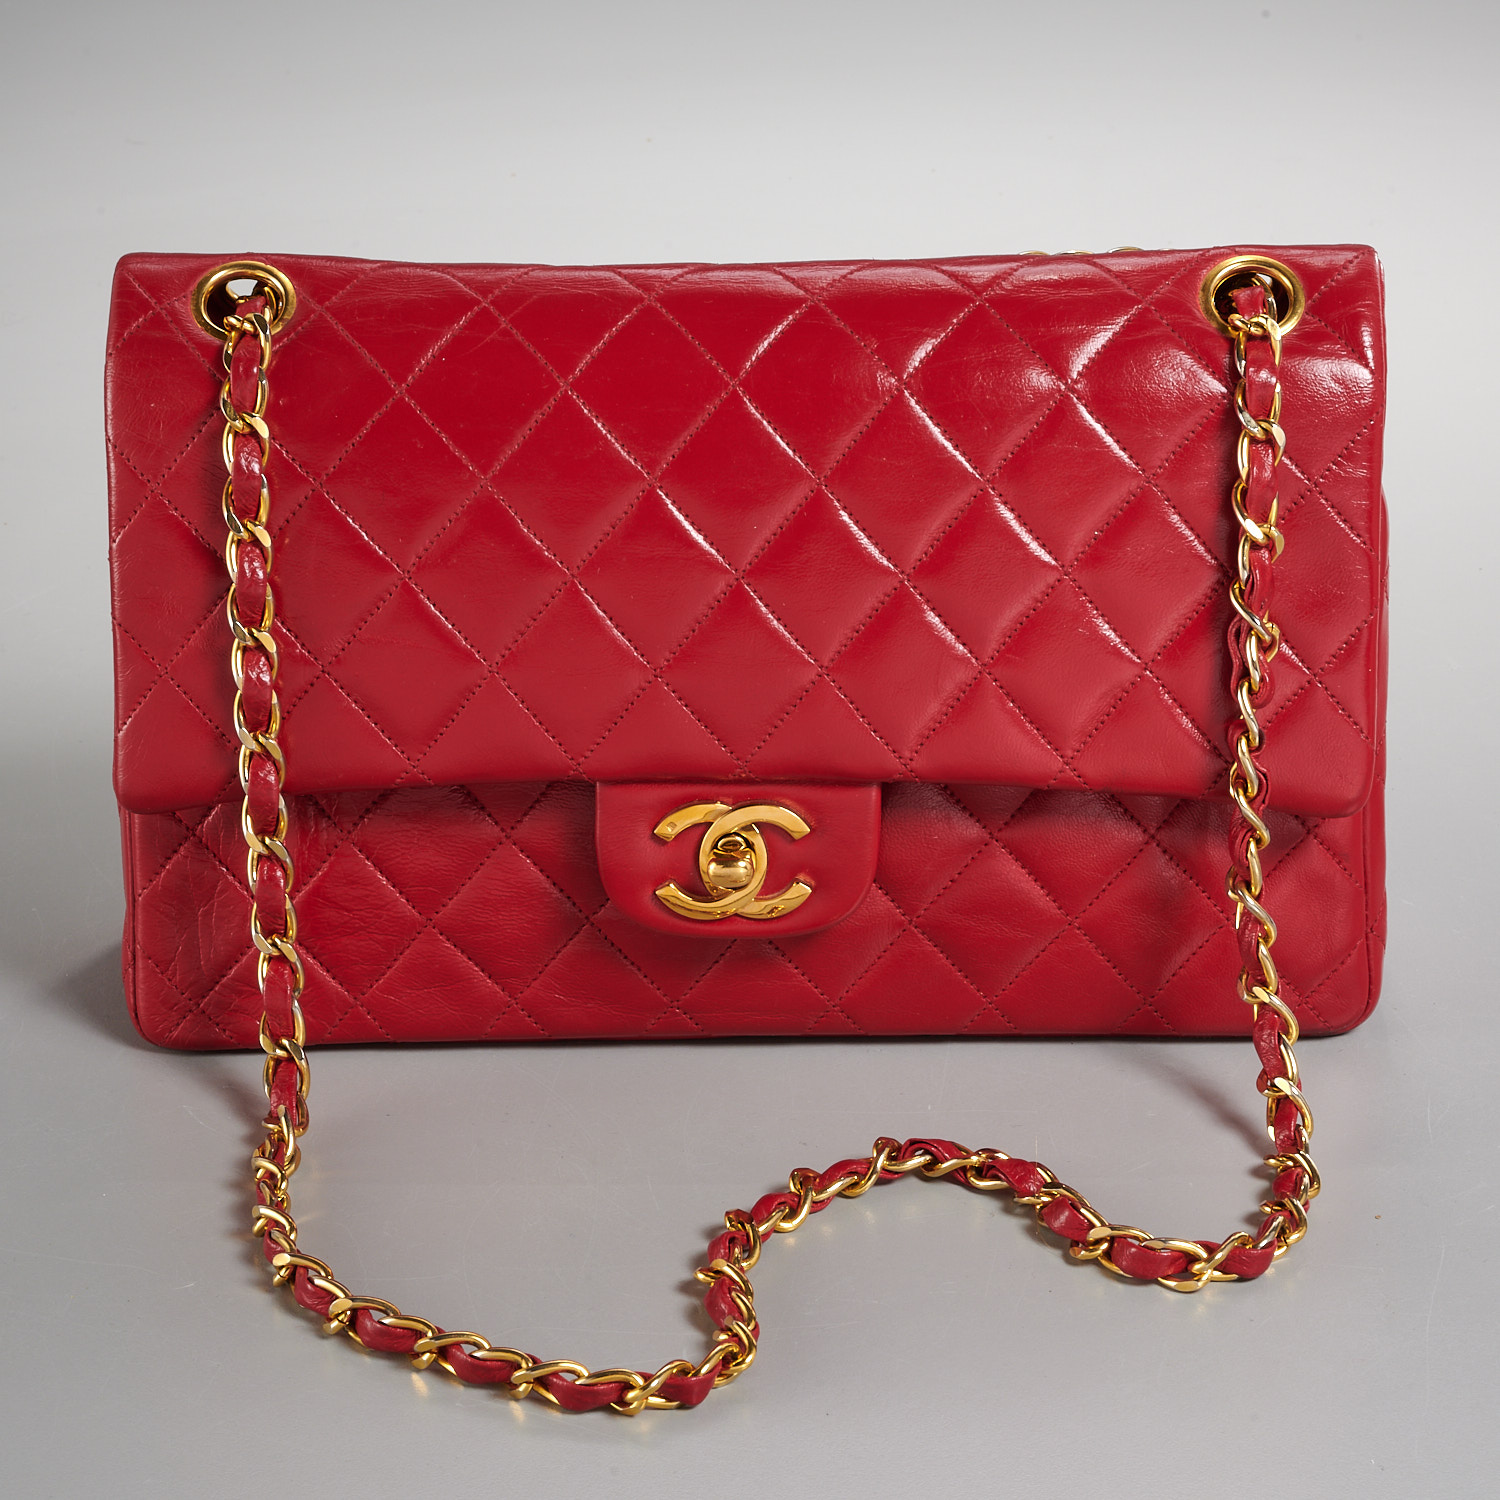 Chanel red lambskin medium double flap handbag